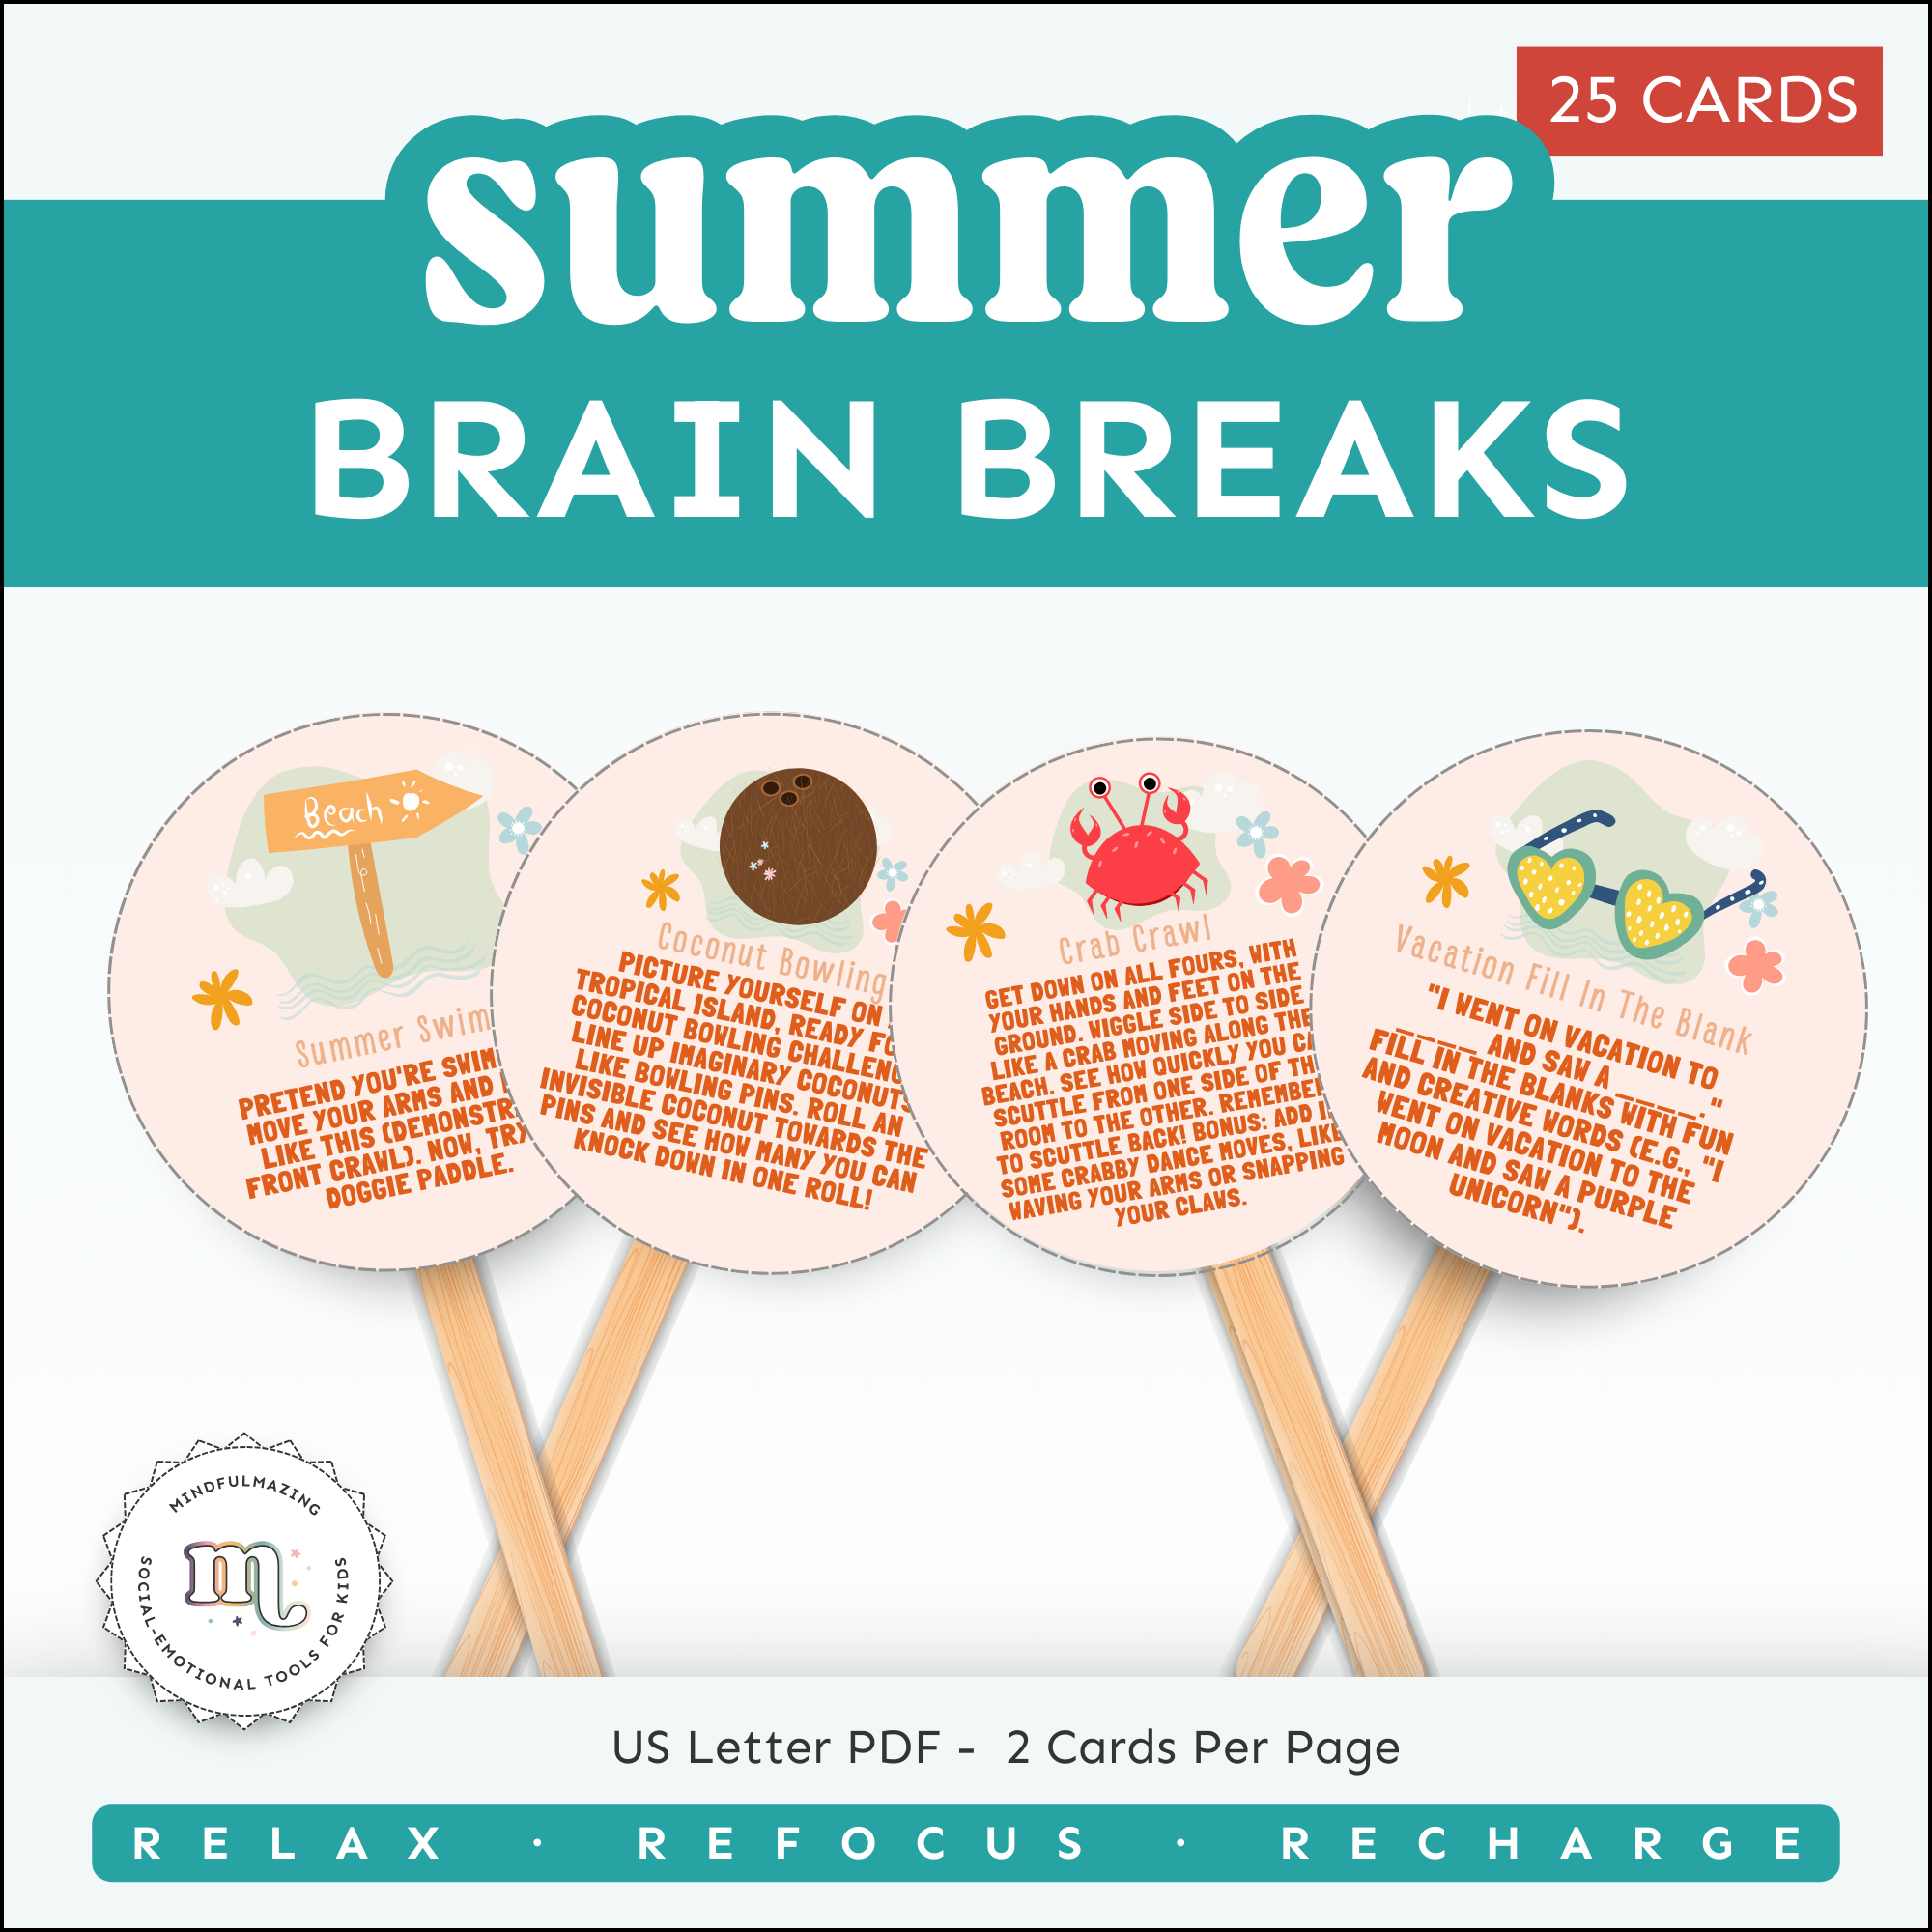 Summer-themed Brain Breaks